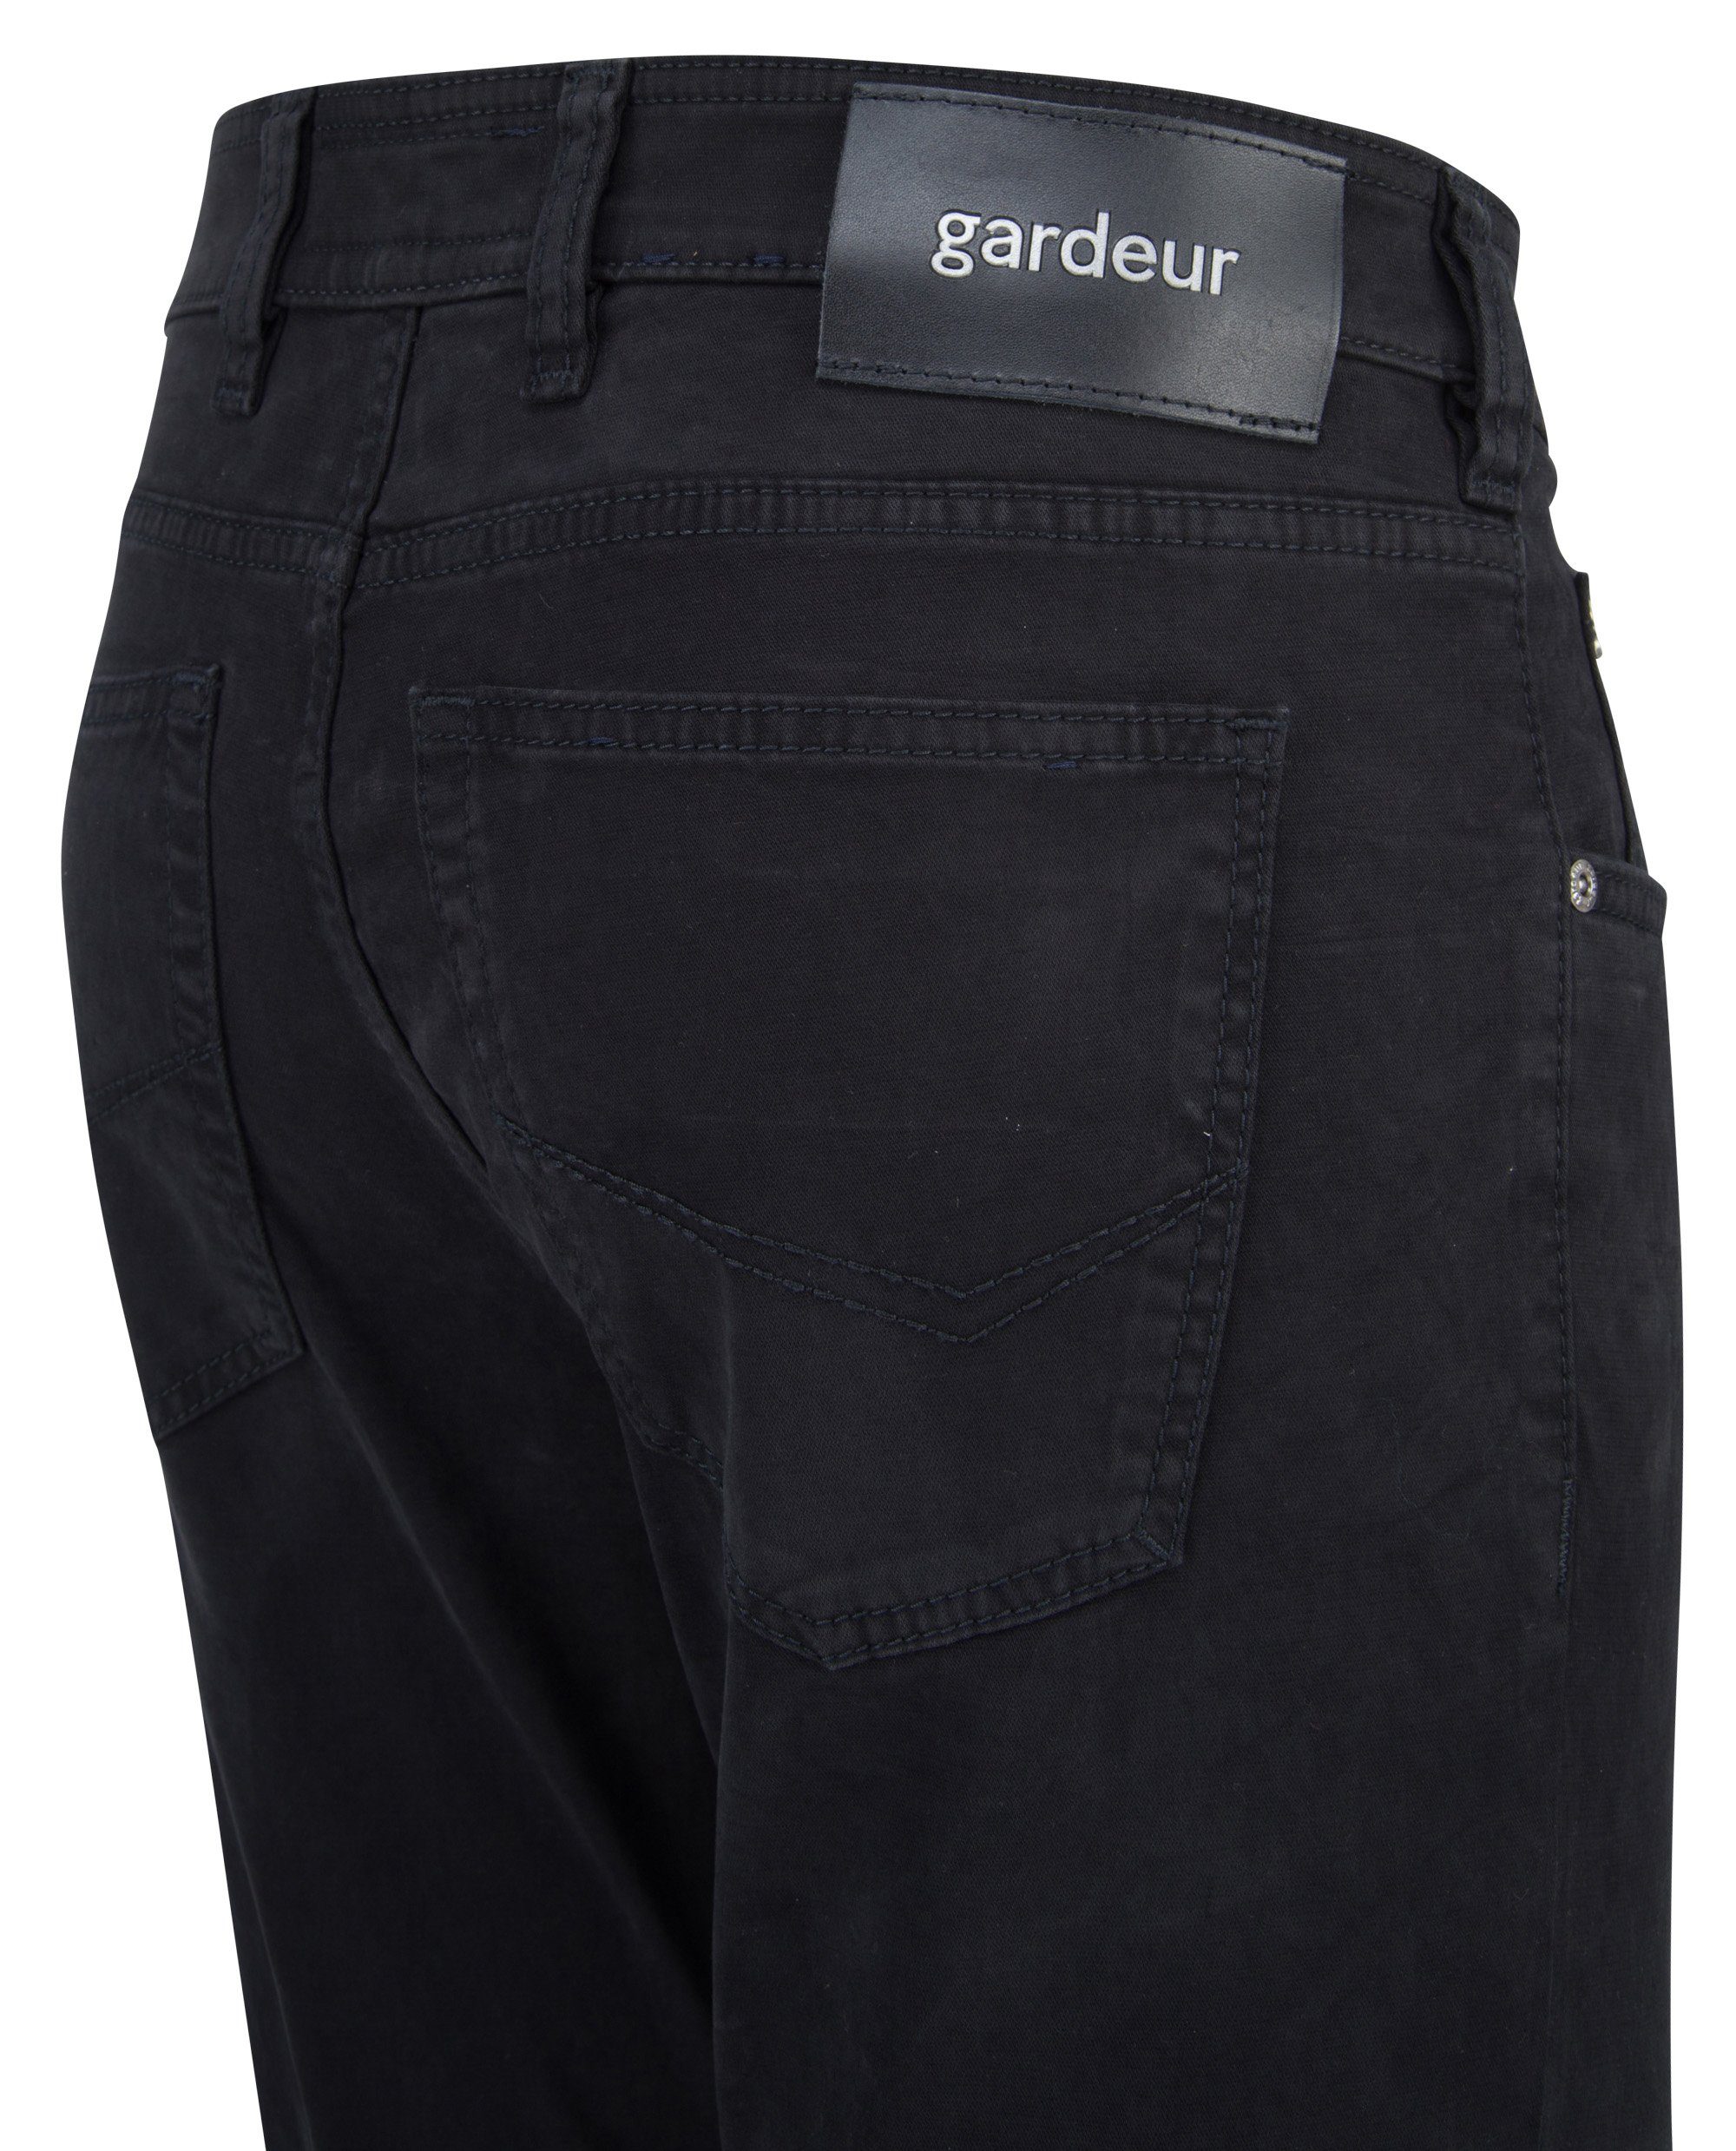 3-0-413861-99 ATELIER GARDEUR BILL Atelier GARDEUR 5-Pocket-Jeans black